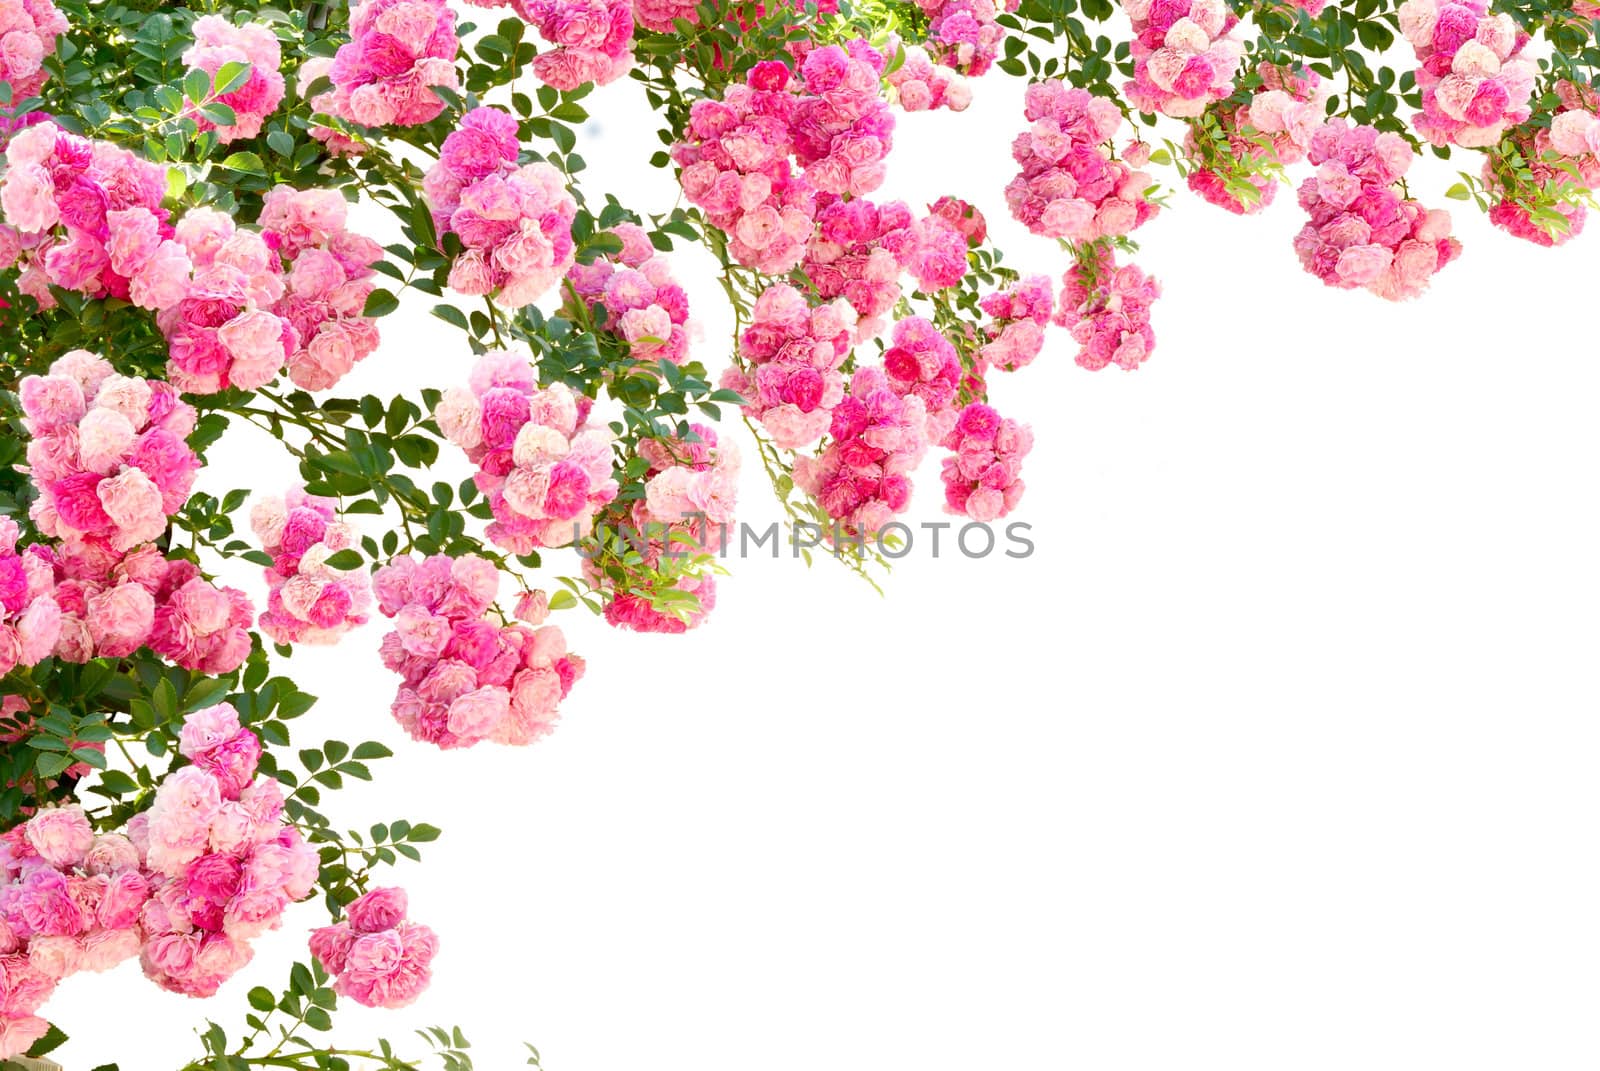 rose flowers isolated on white background by makspogonii